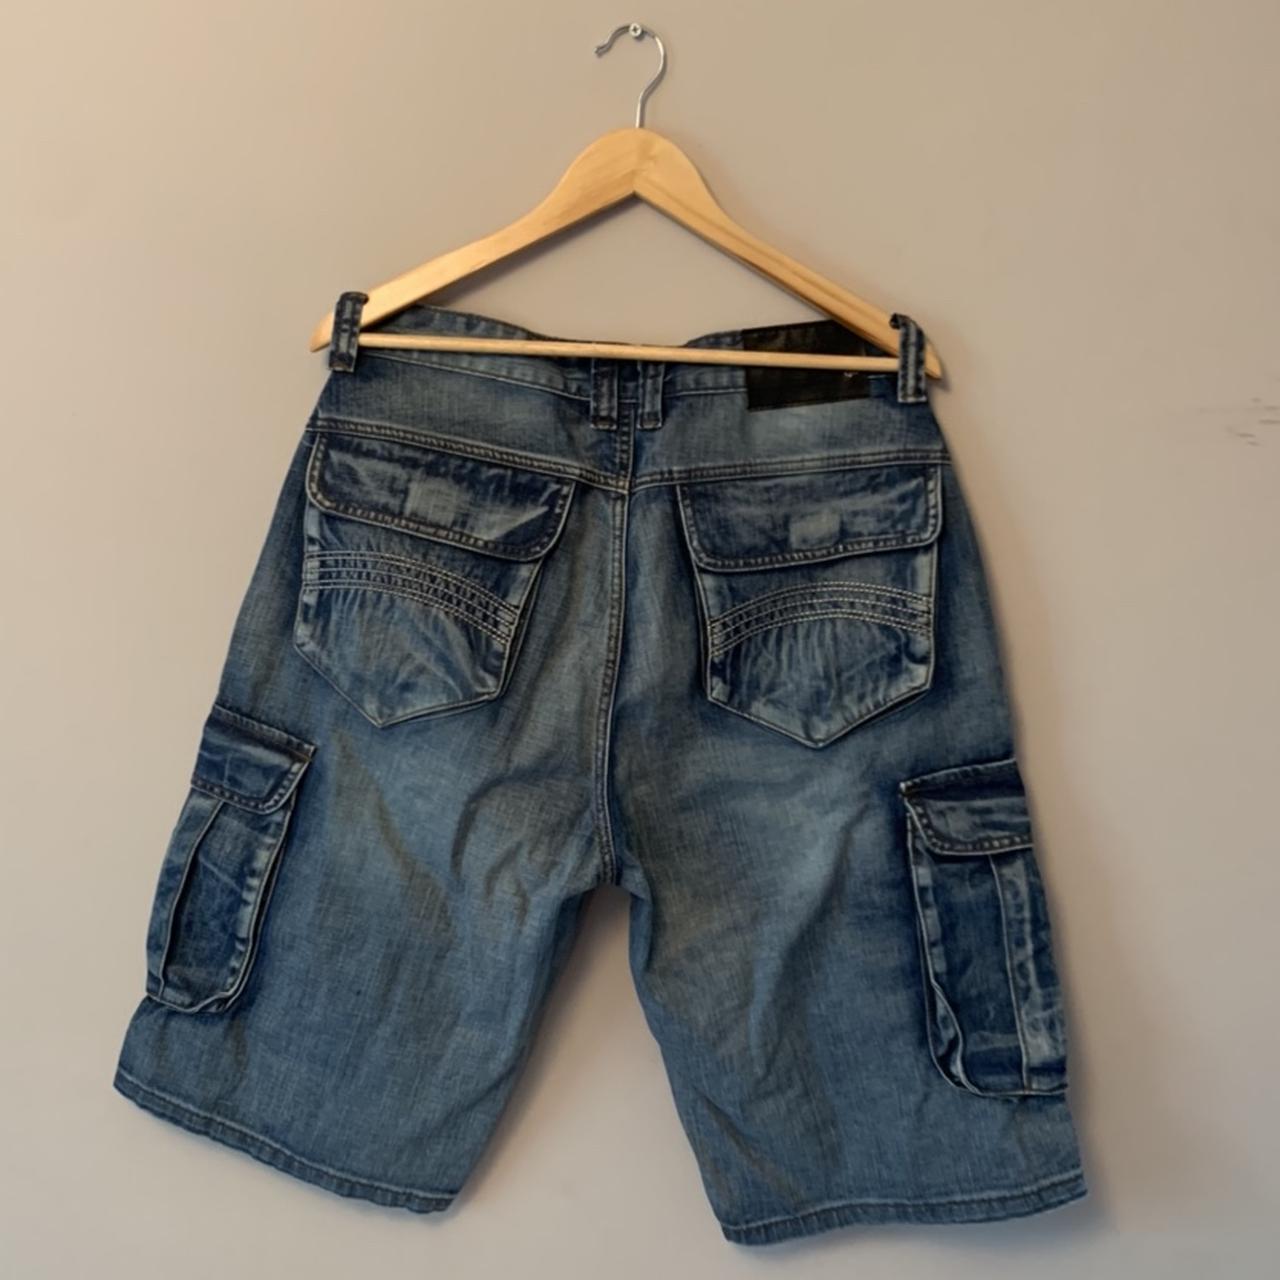 Vintage Play Bigg denim jeans cargo shorts. Waist... - Depop